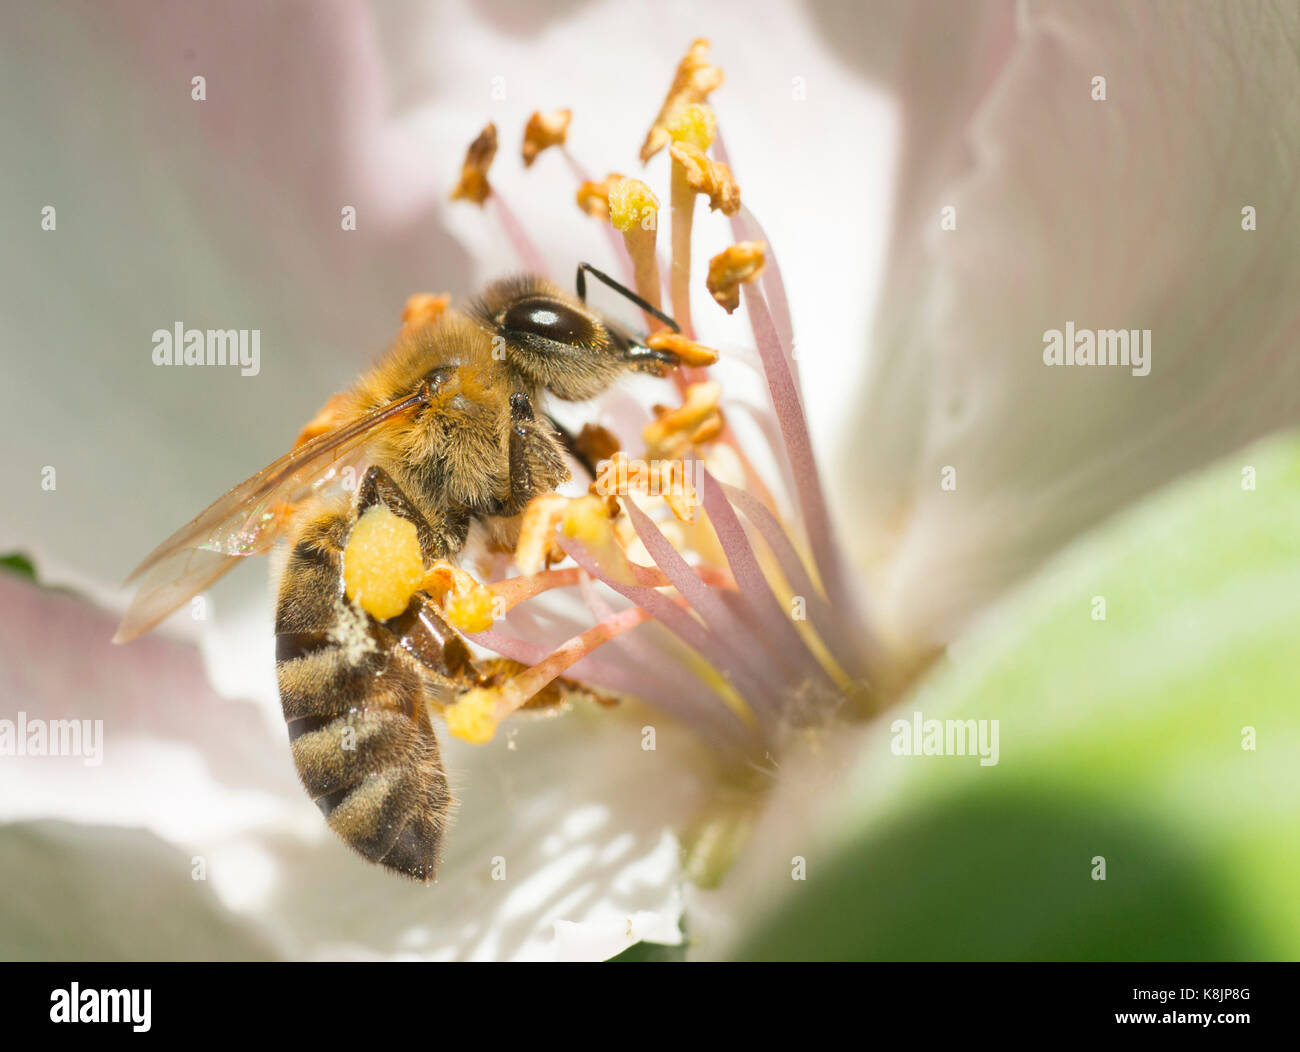 Bee on apple flower collecting honey. Stock Photo